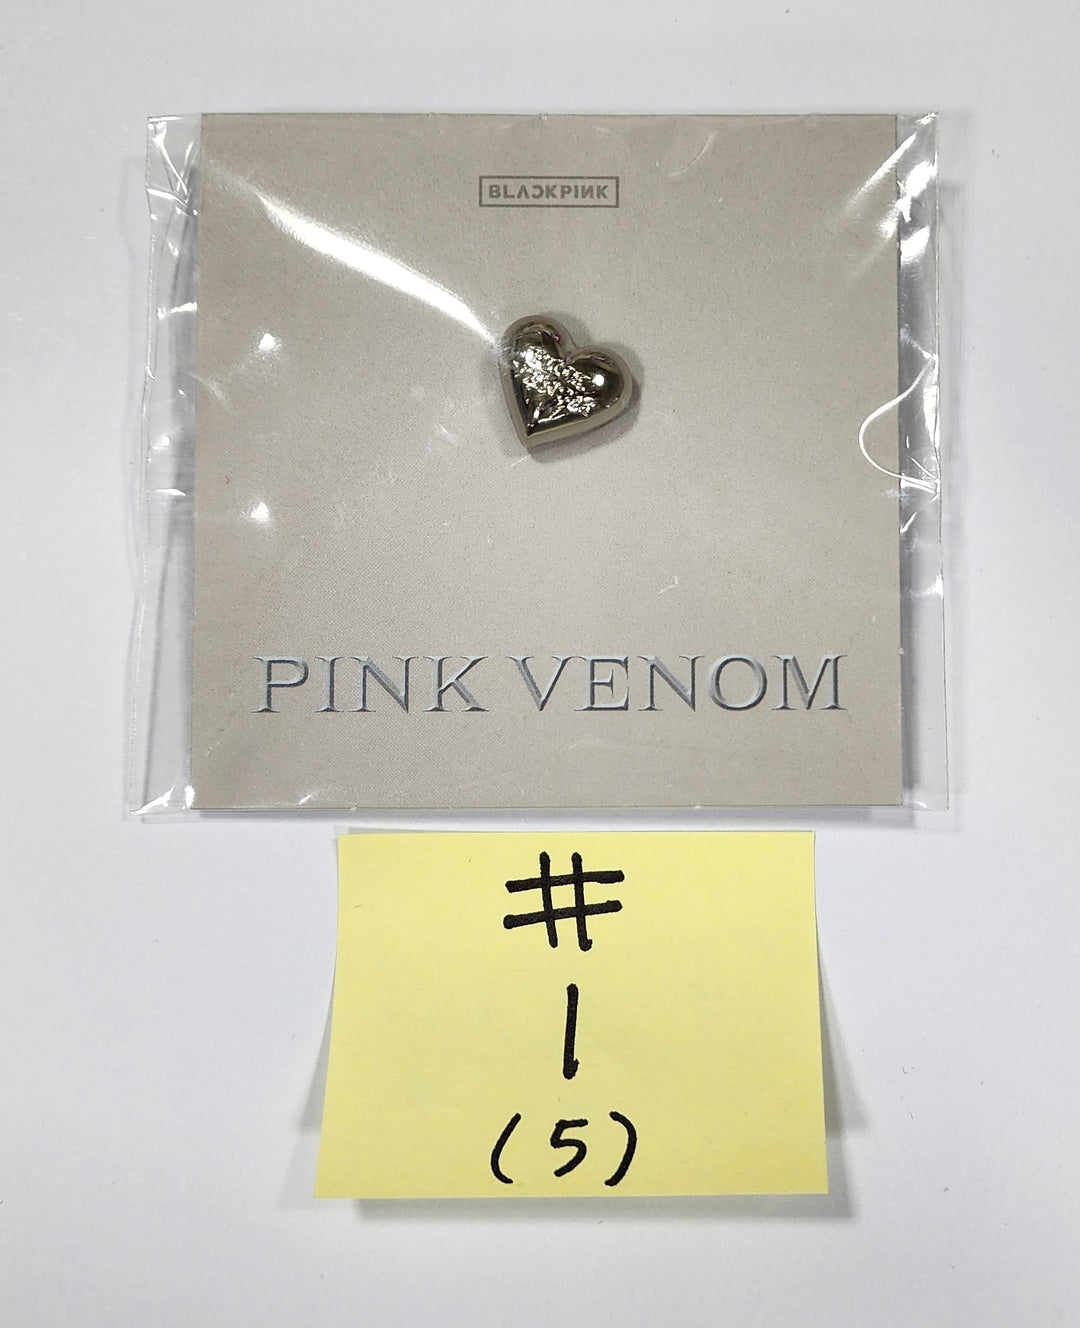 Black Pink "PINK VENOM" - Official Pin Badge